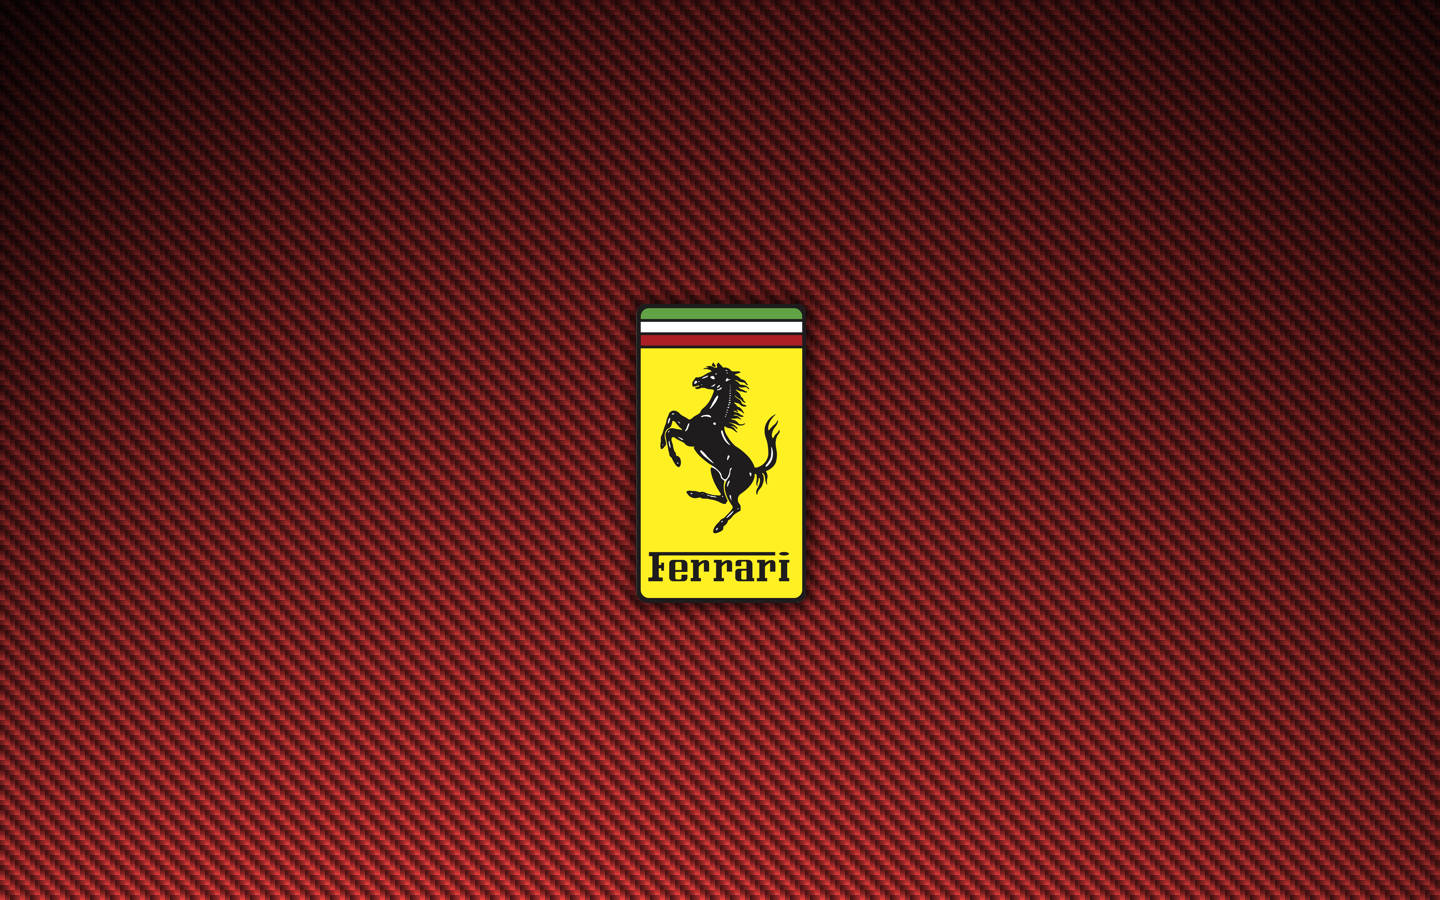 Red Ferrari with Carbon Fiber Finish Wallpaper